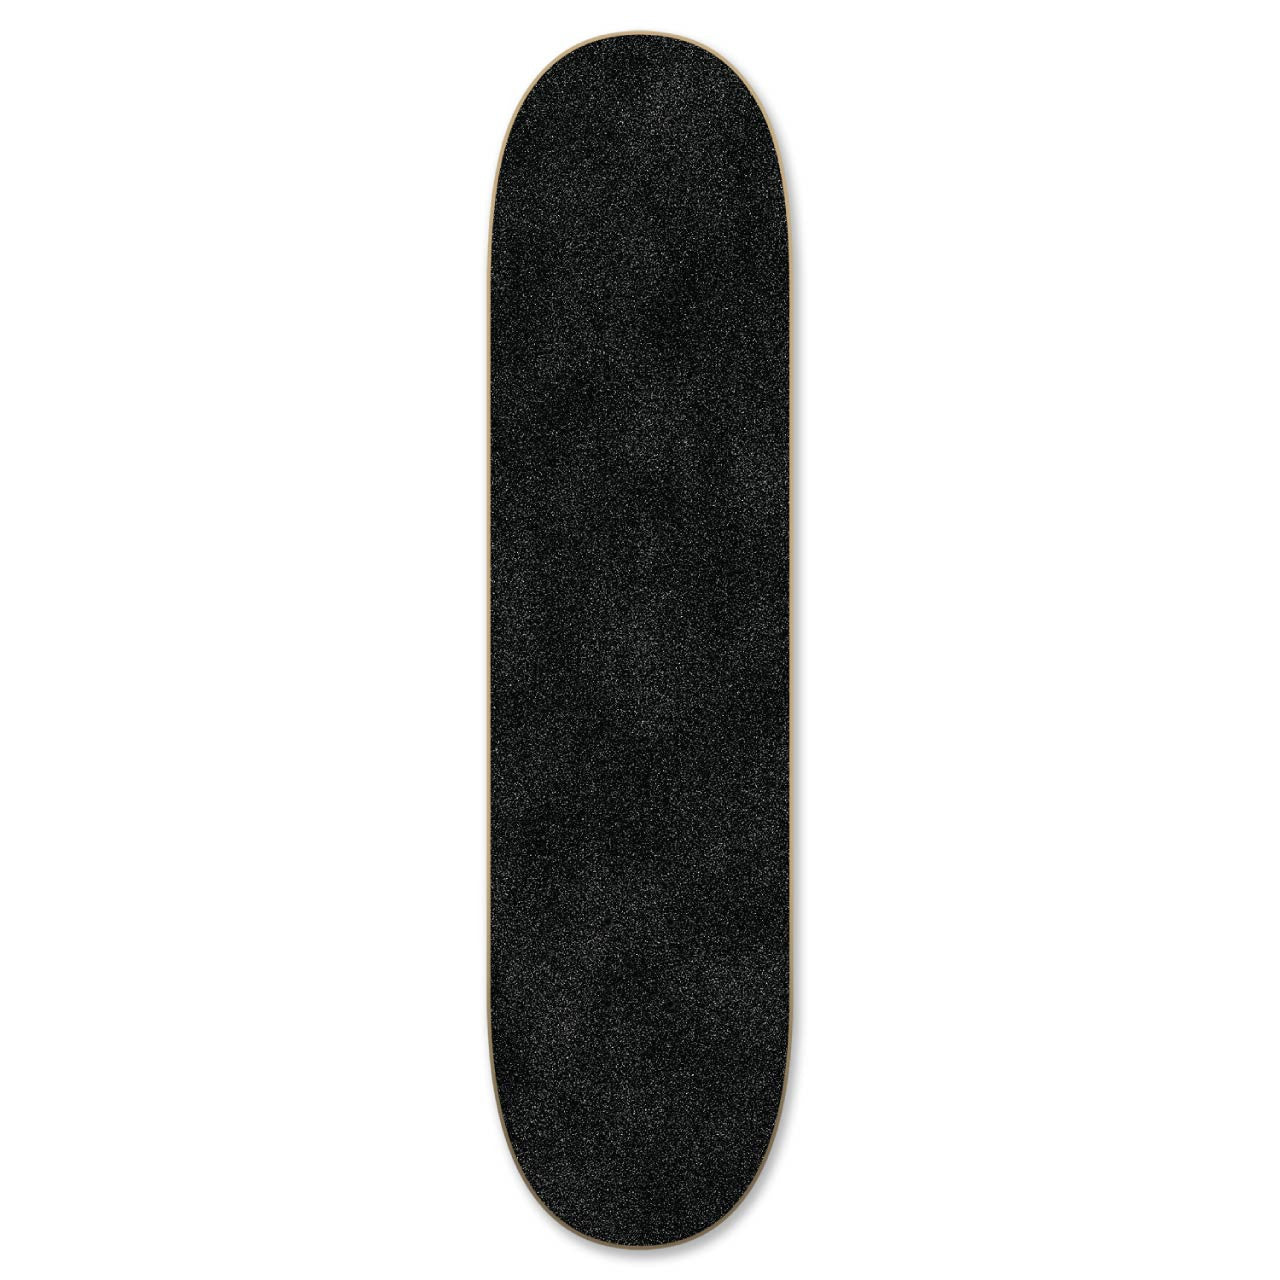 Yocaher Graphic Skateboard Deck  - PIKA Series - Charm